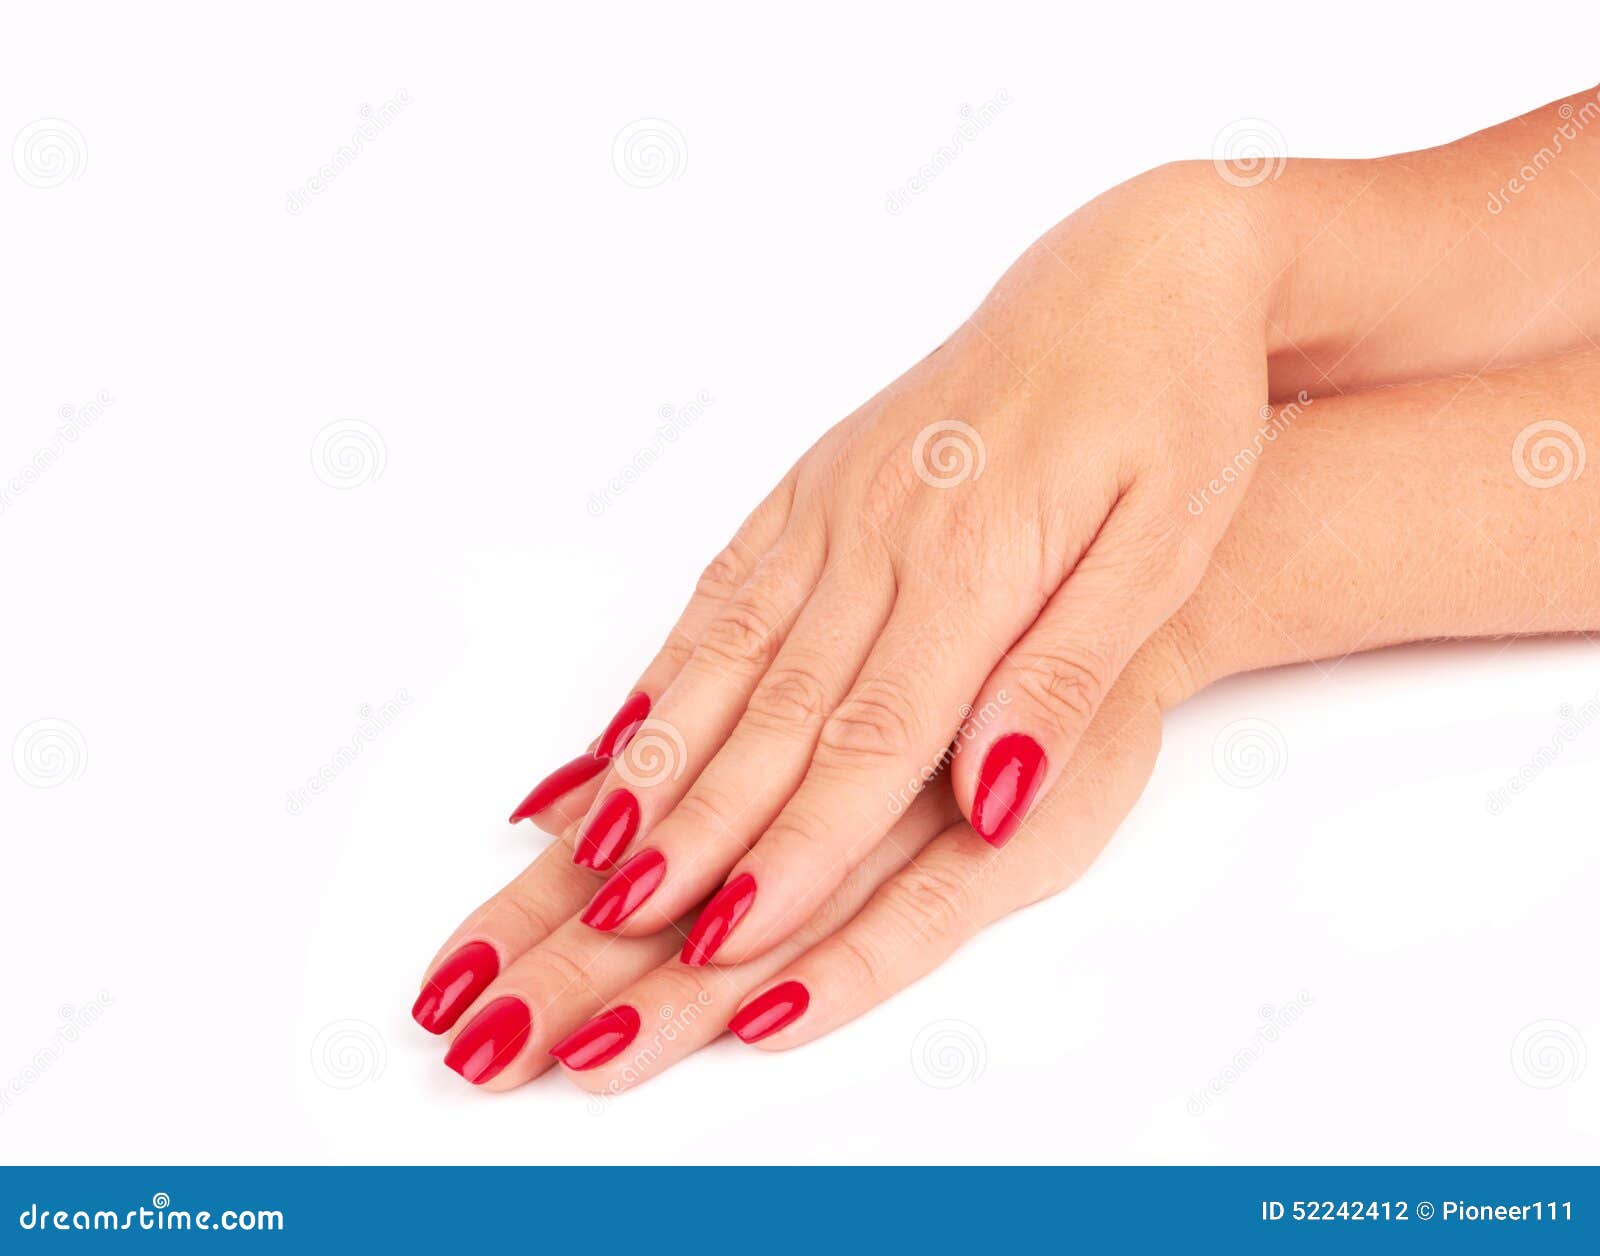 Nail red stock photo. Image of finger, closeup, human - 52242412